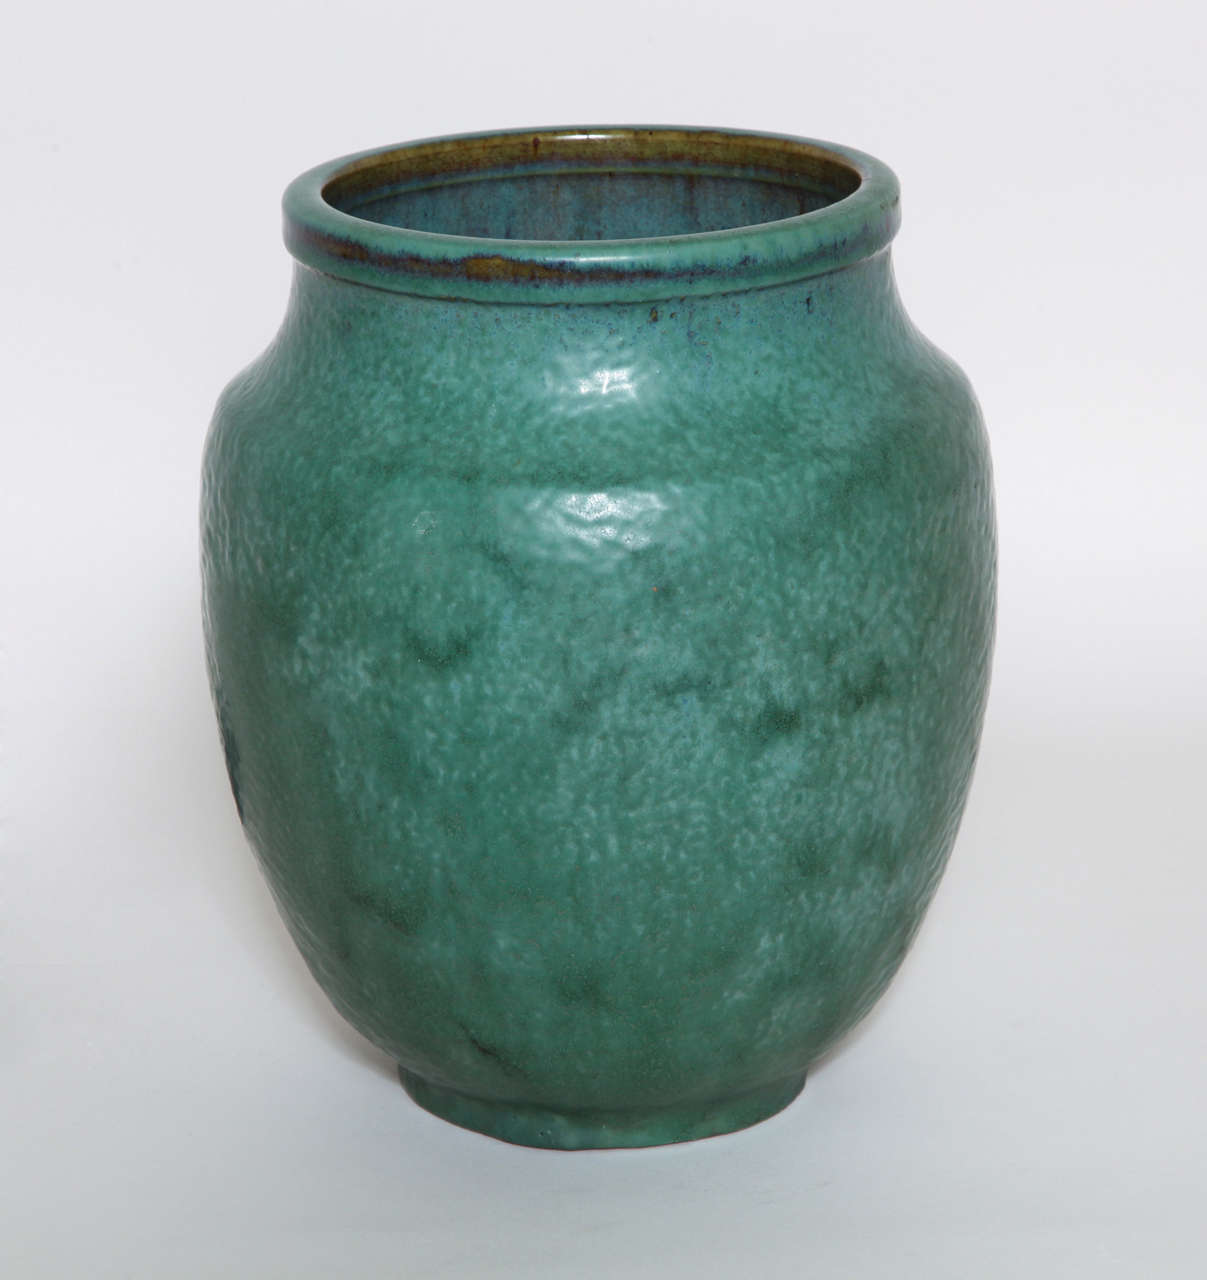 Stoneware vase with mottled green glaze by Emile Decoeur (1876-1953).
Signed: E DECOEUR 5 incised on base

Other Emile Decoeur vases available.